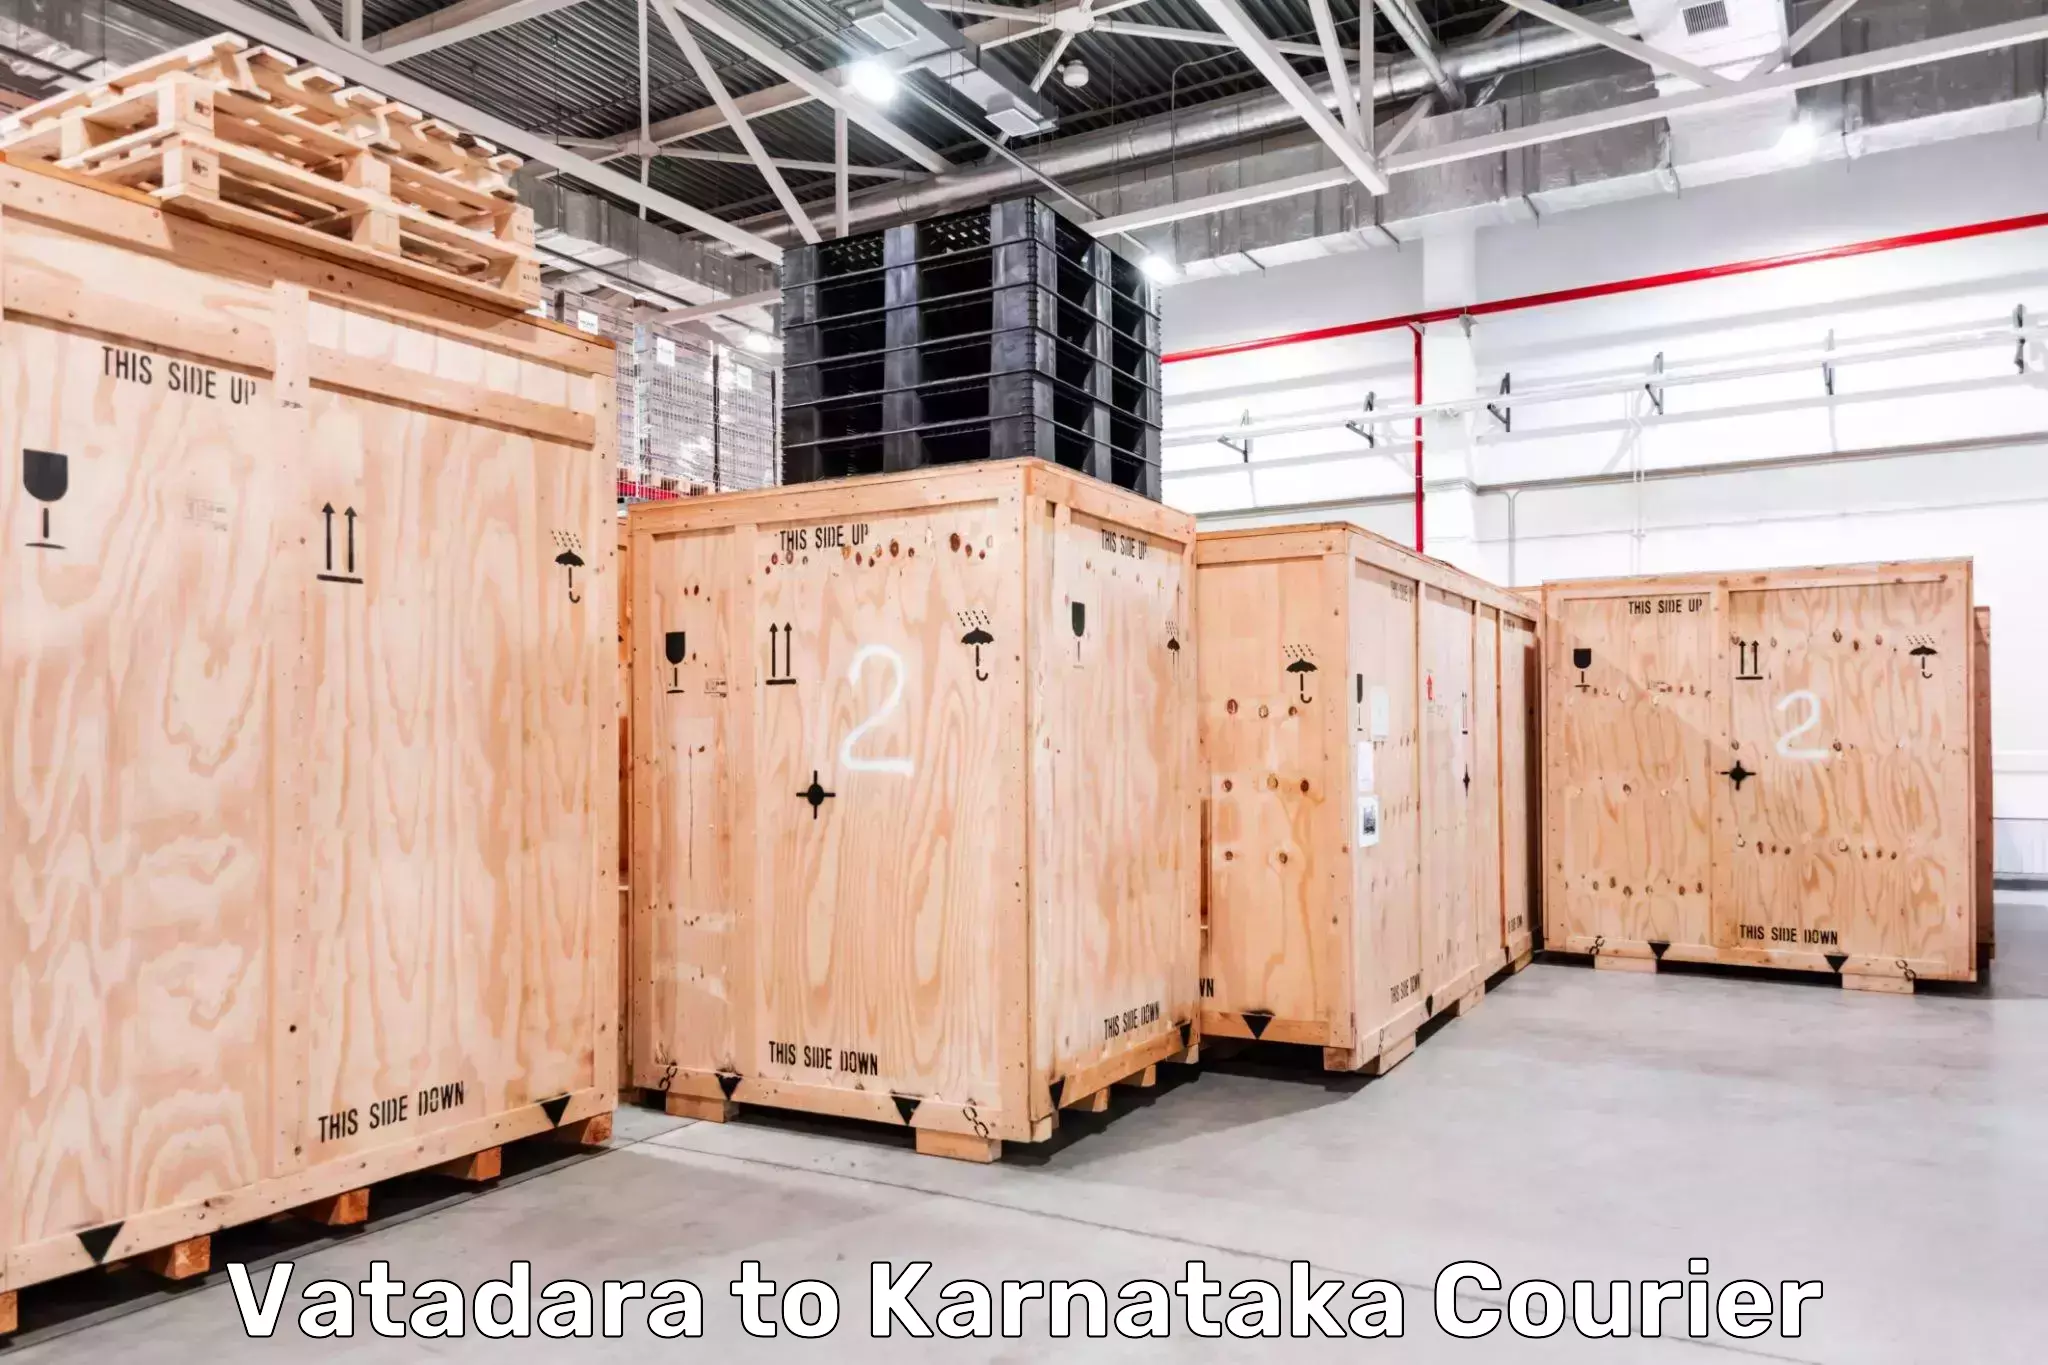 State-of-the-art courier technology Vatadara to Karnataka